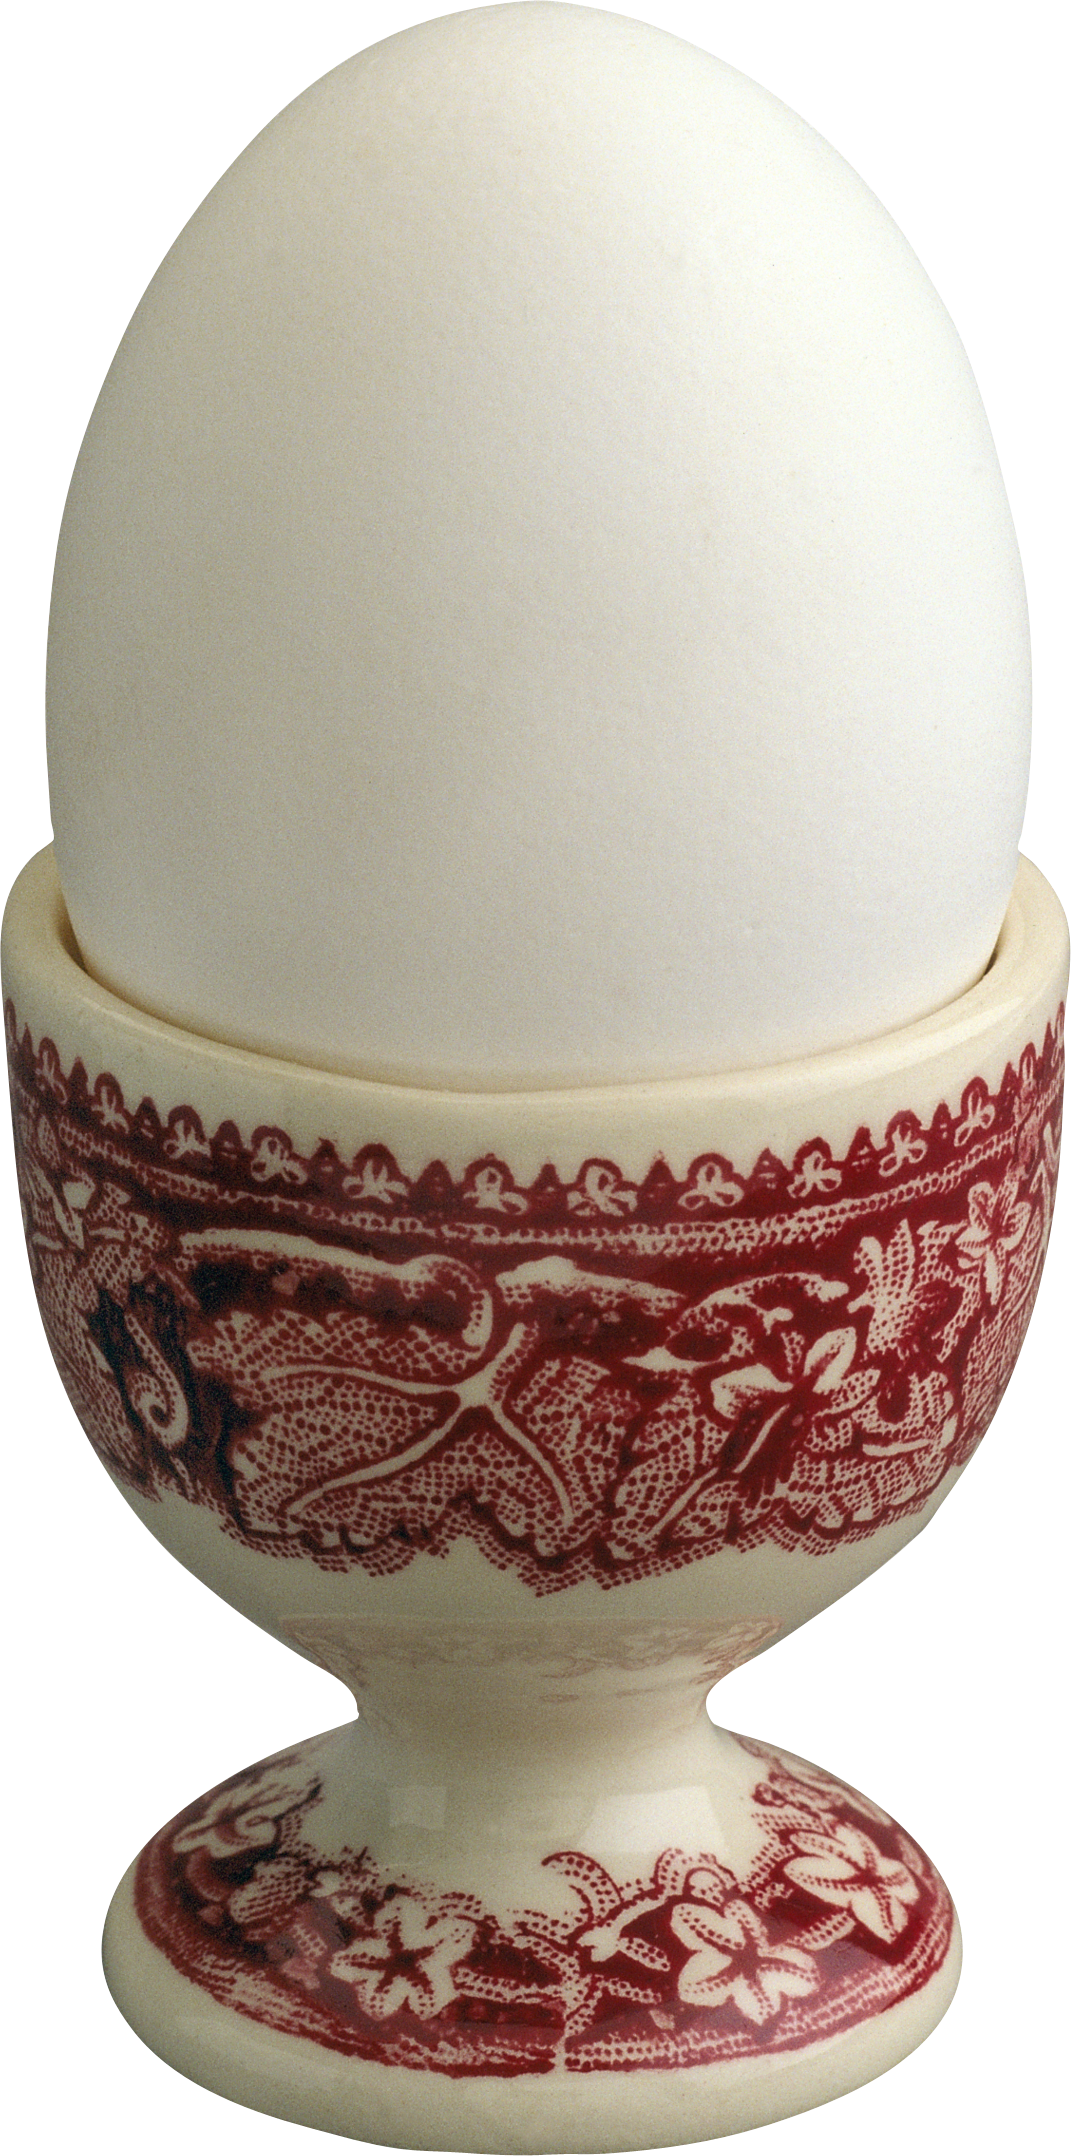 Kupa üzerinde yumurta